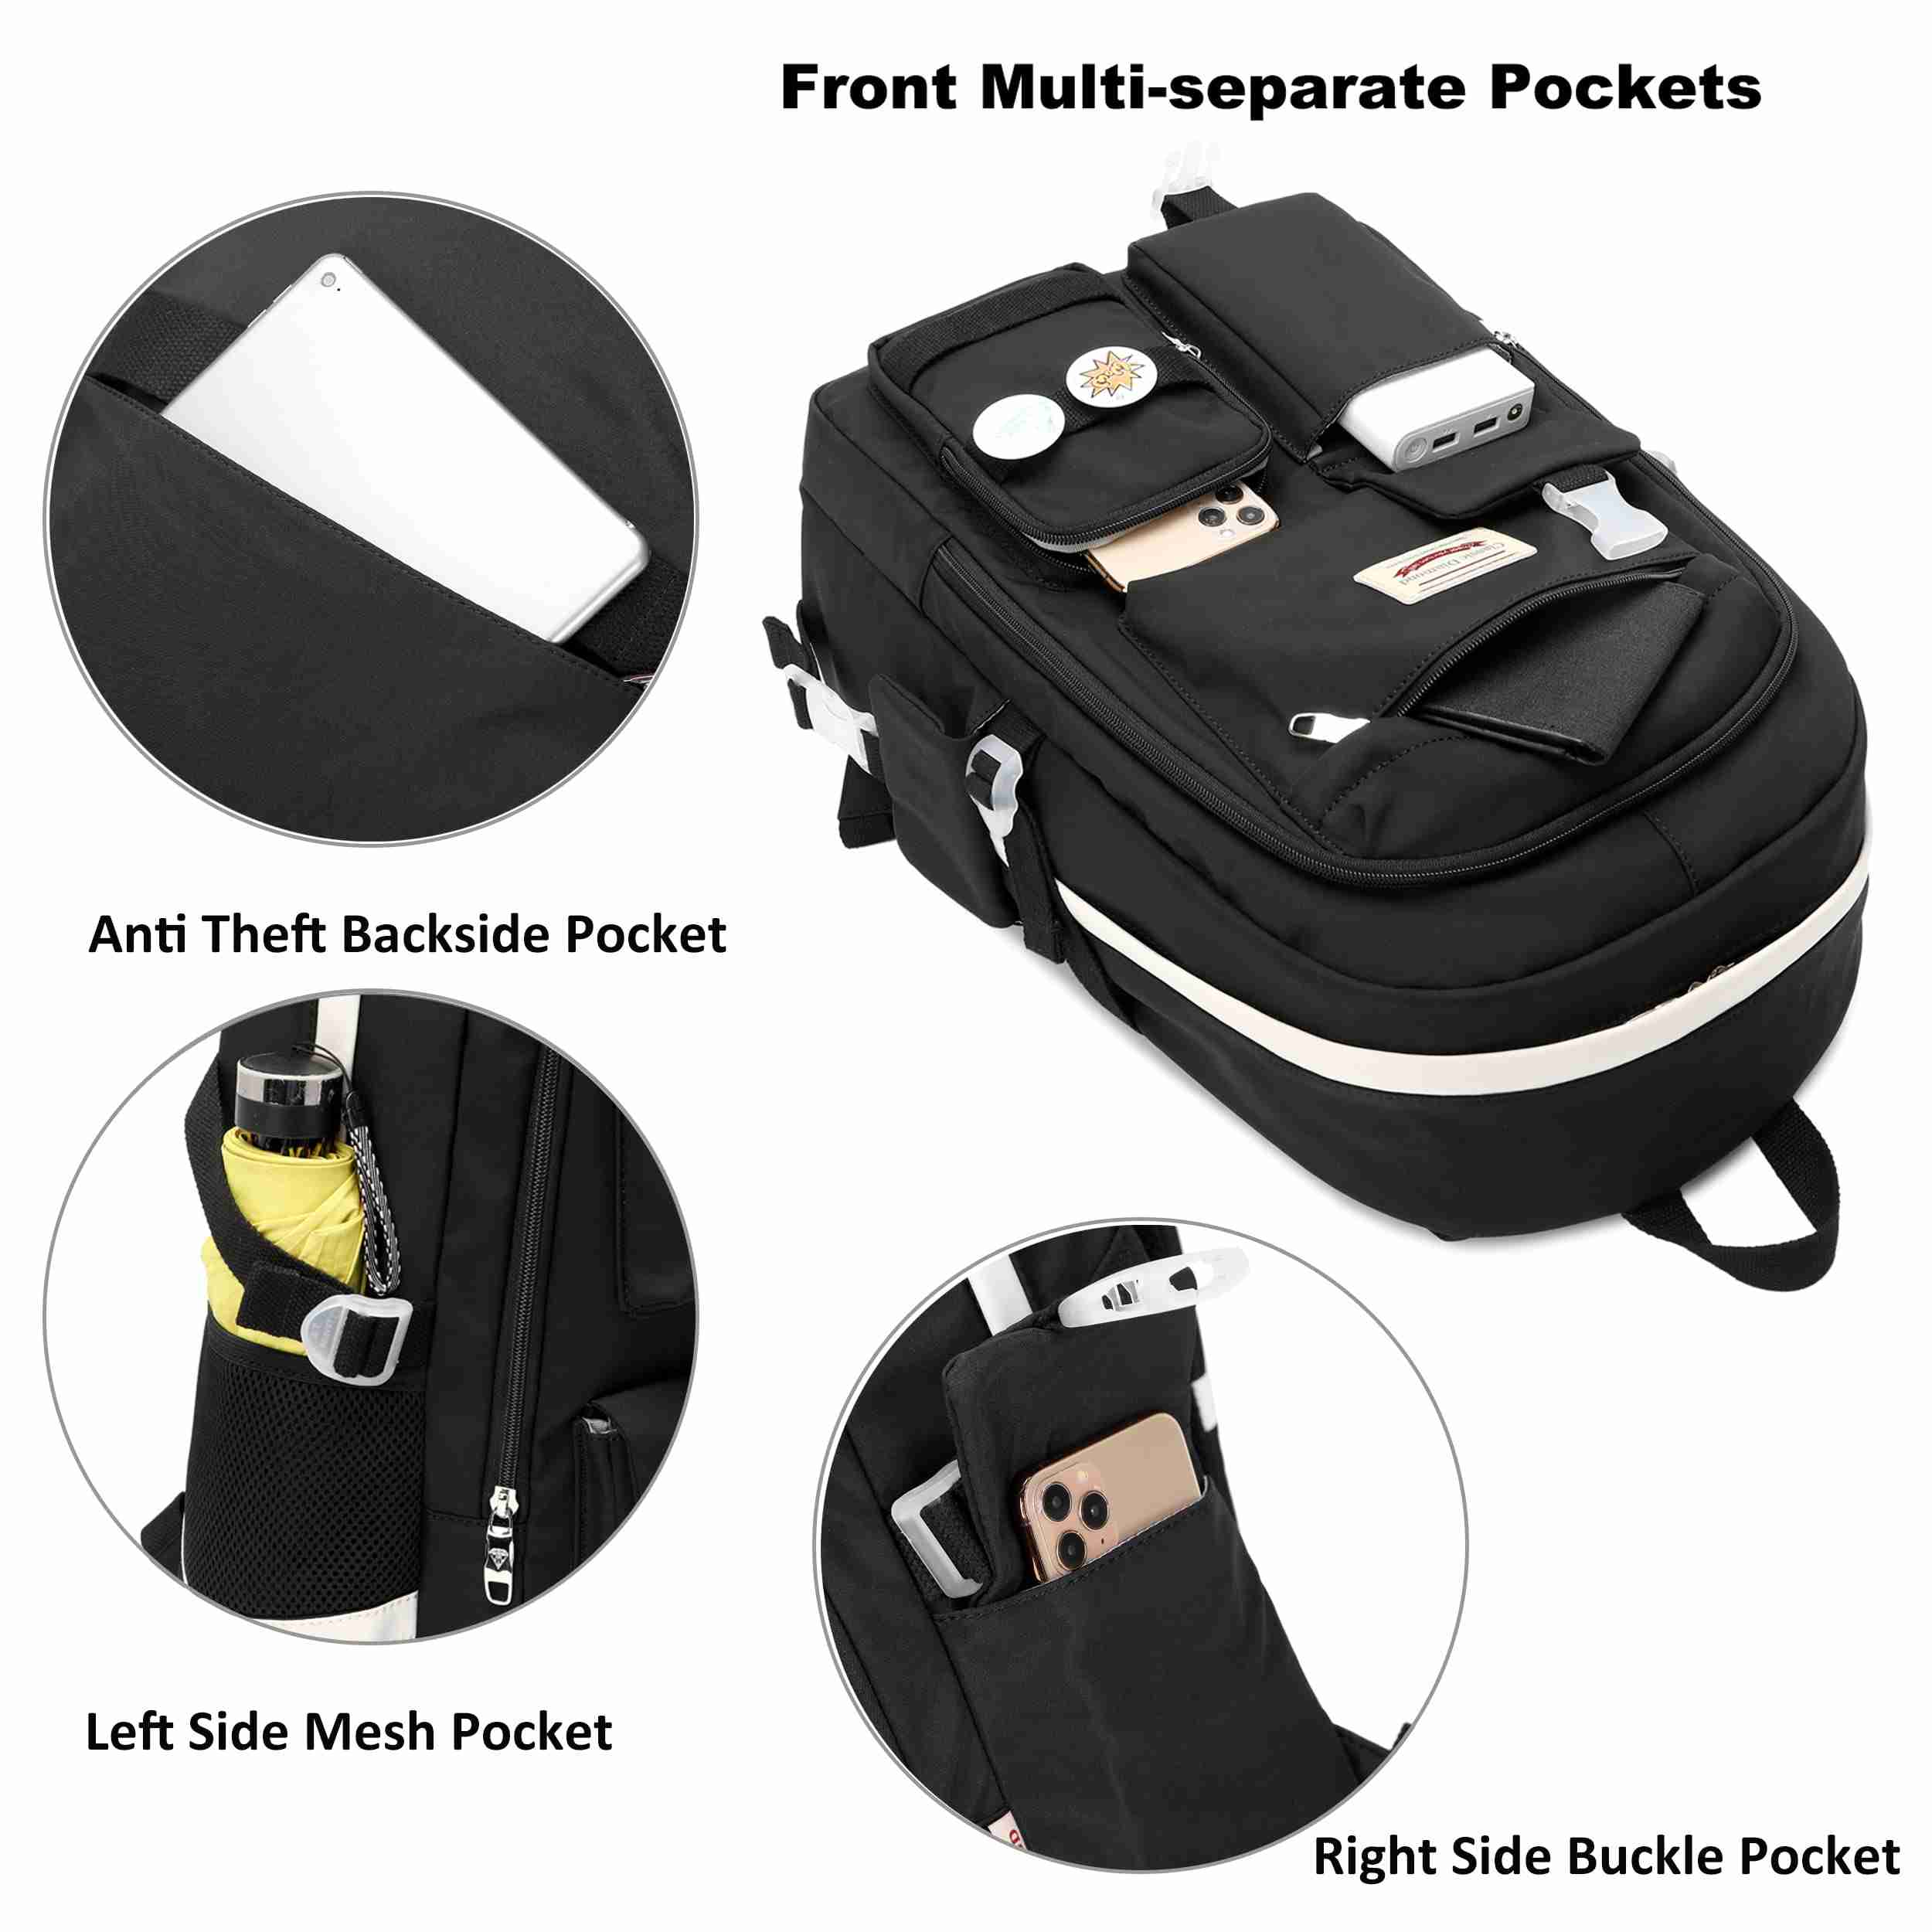 Laptop Backpack Student Schoolbag